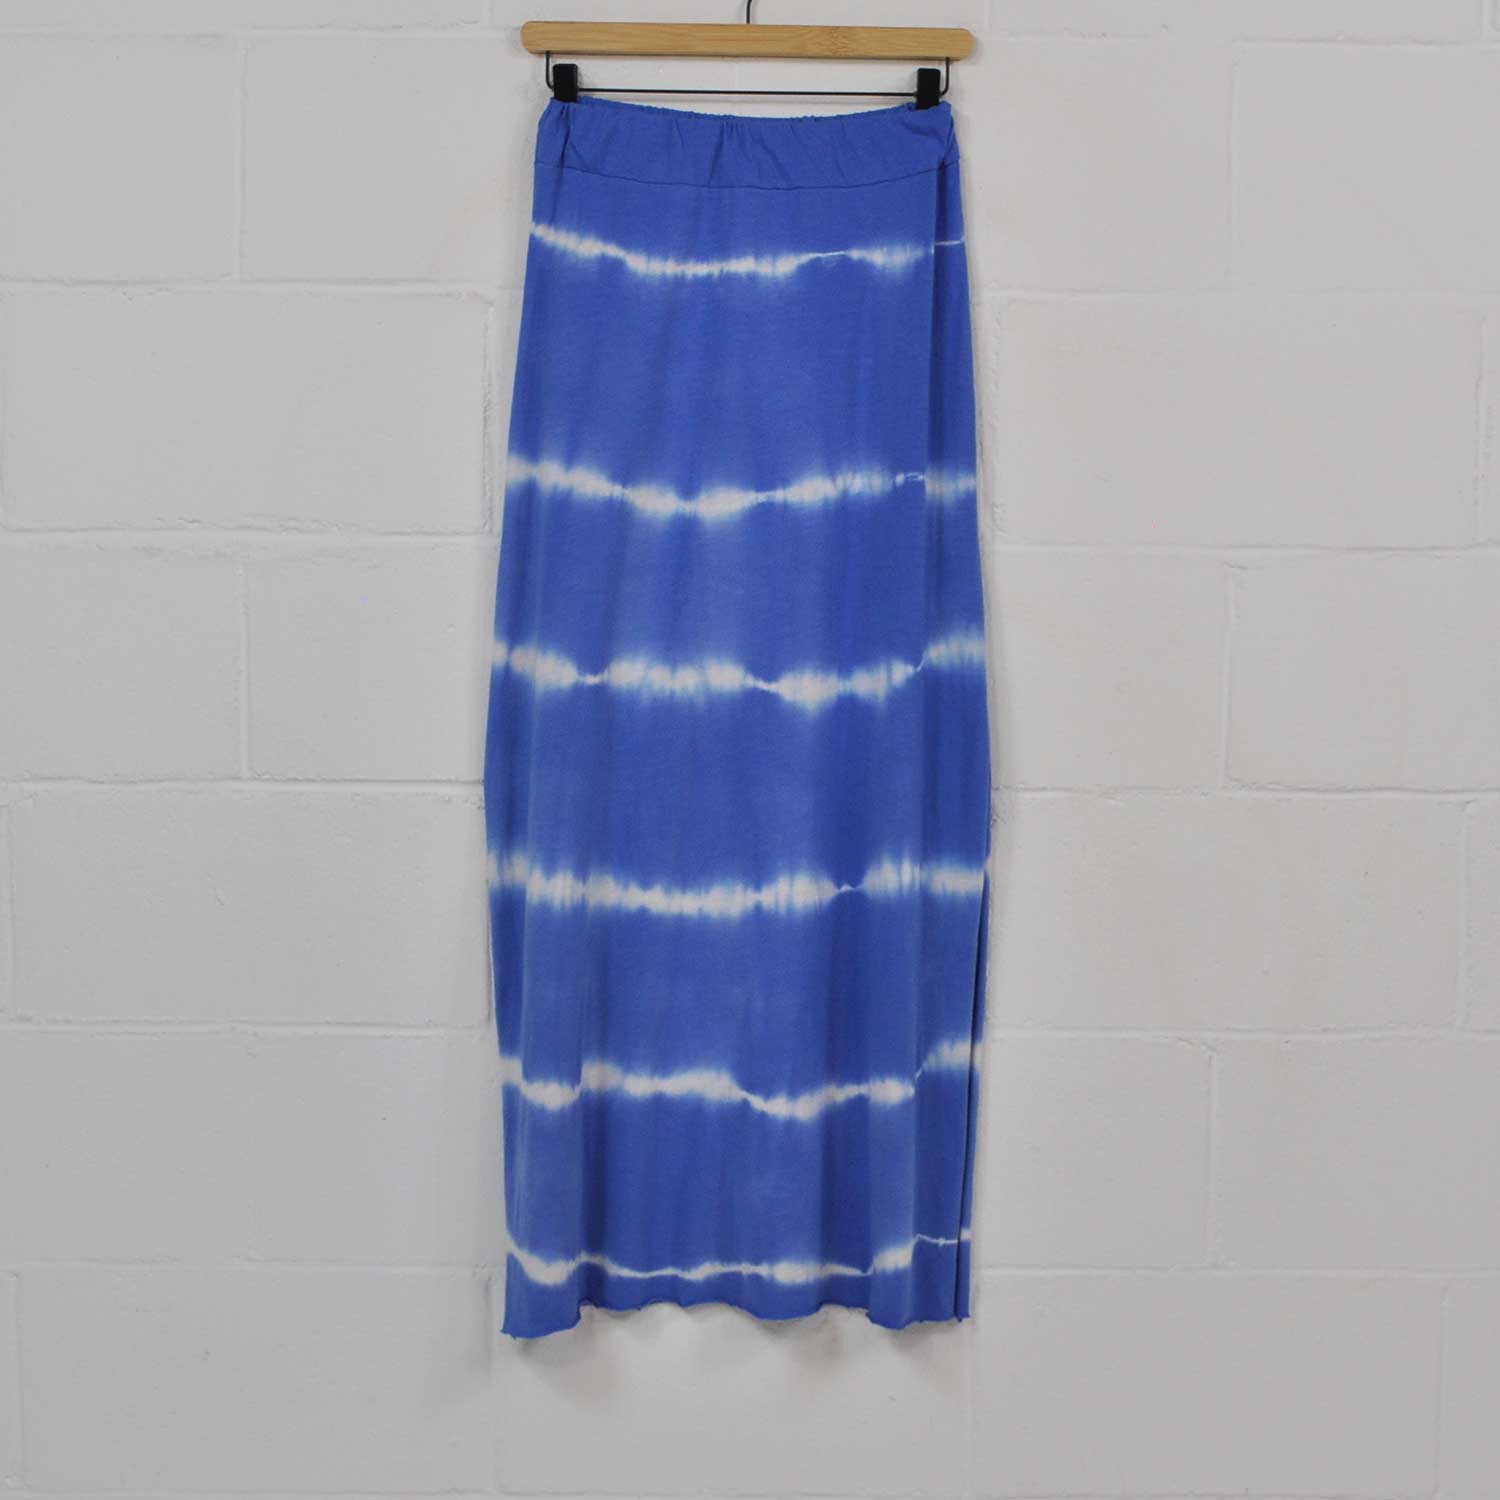 Blue tie dye skirt